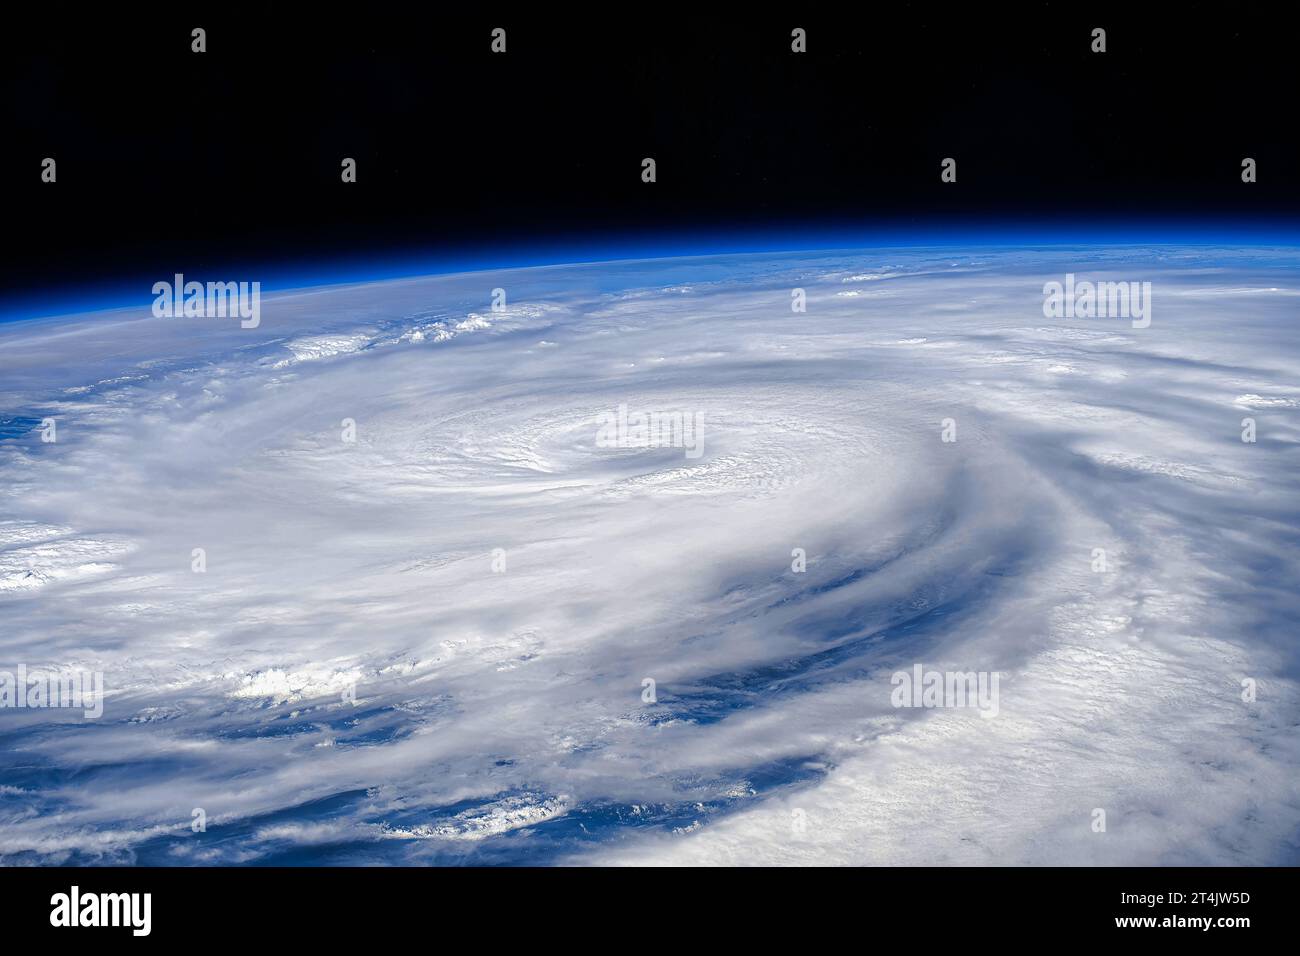 Storm, cyclone, hurricane. Digital enhancement of an image by NASA. Stock Photo